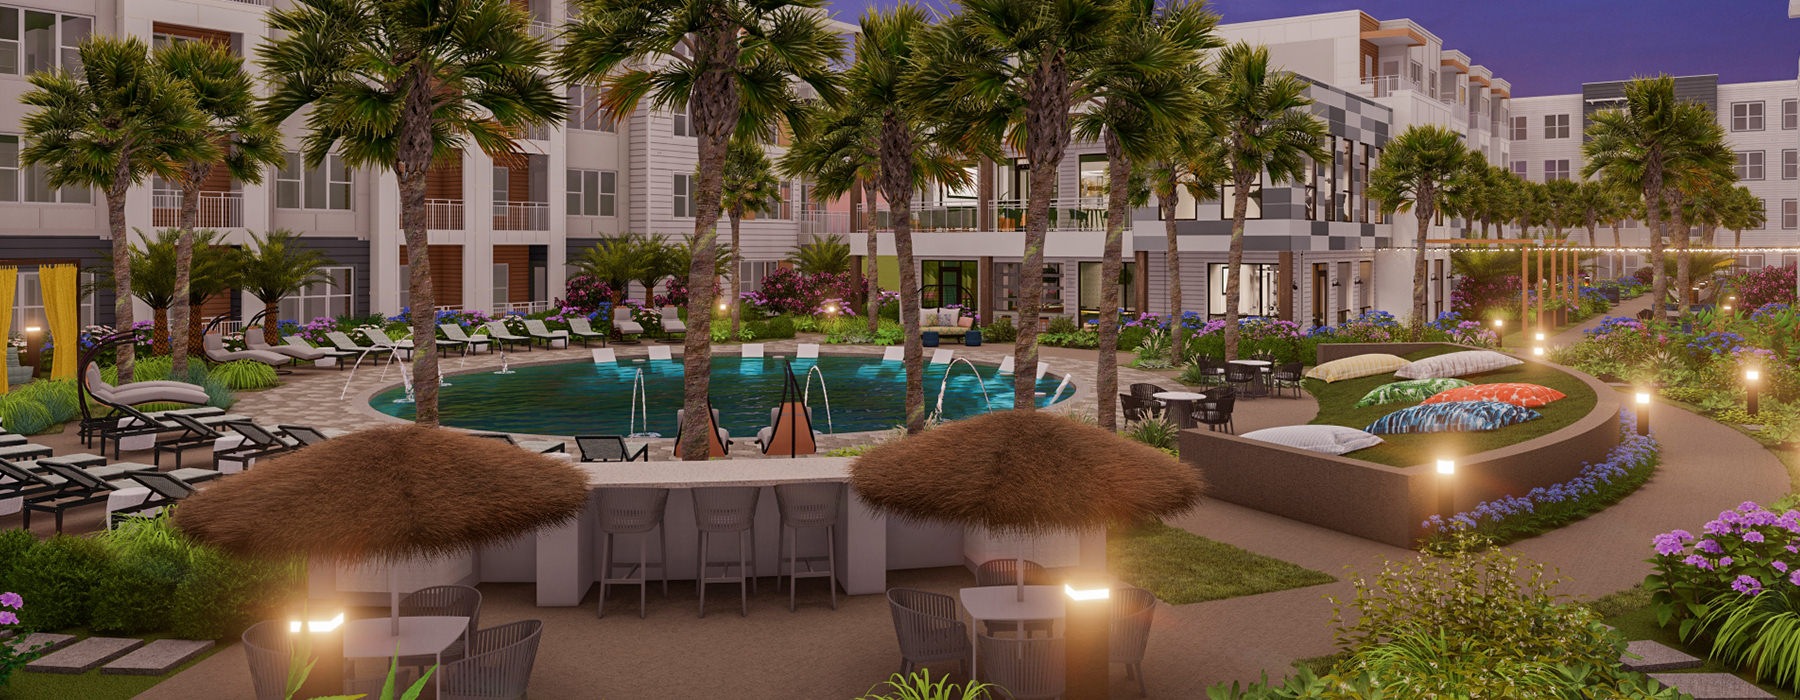 Resort-style pool area